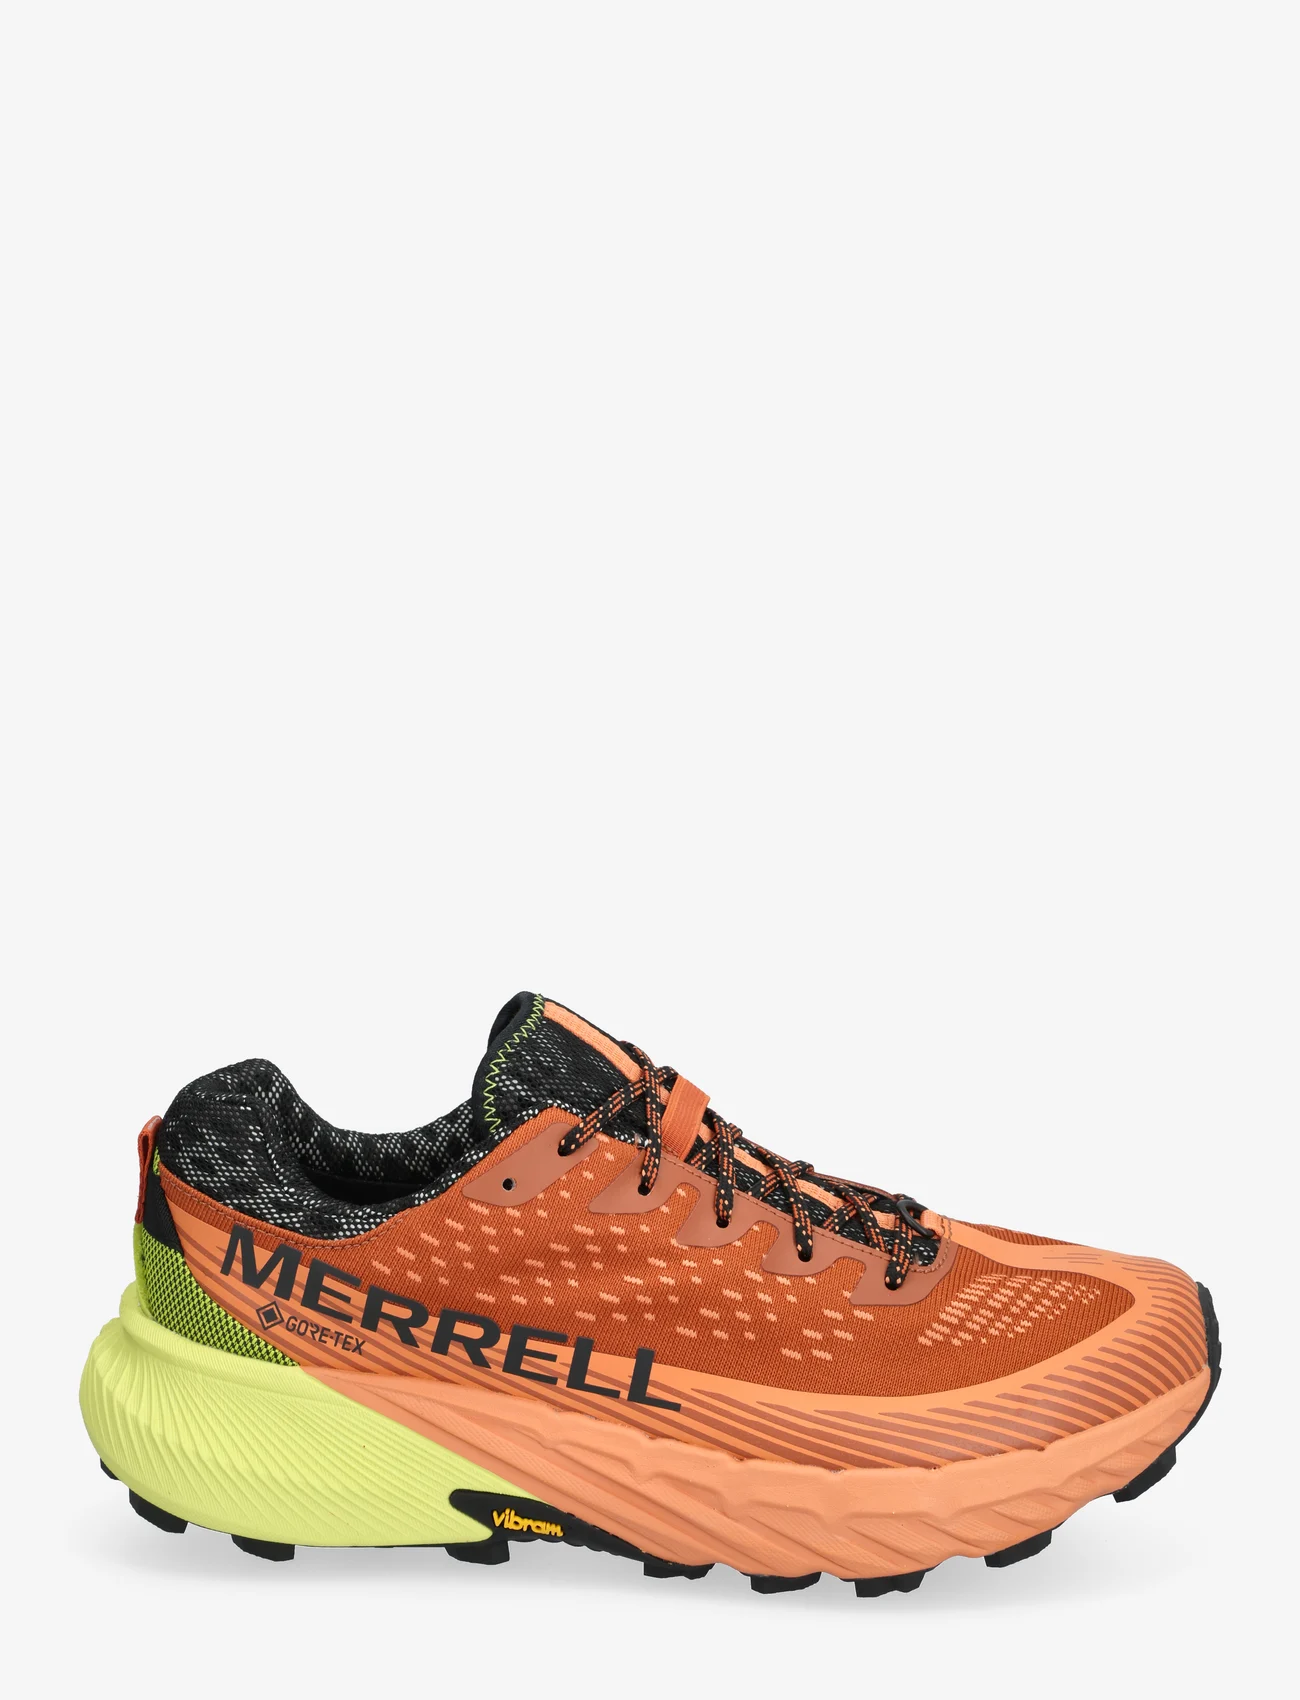 Merrell - Men's Agility Peak 5 GTX - Clay/Mel - buty do biegania - clay/melon - 1